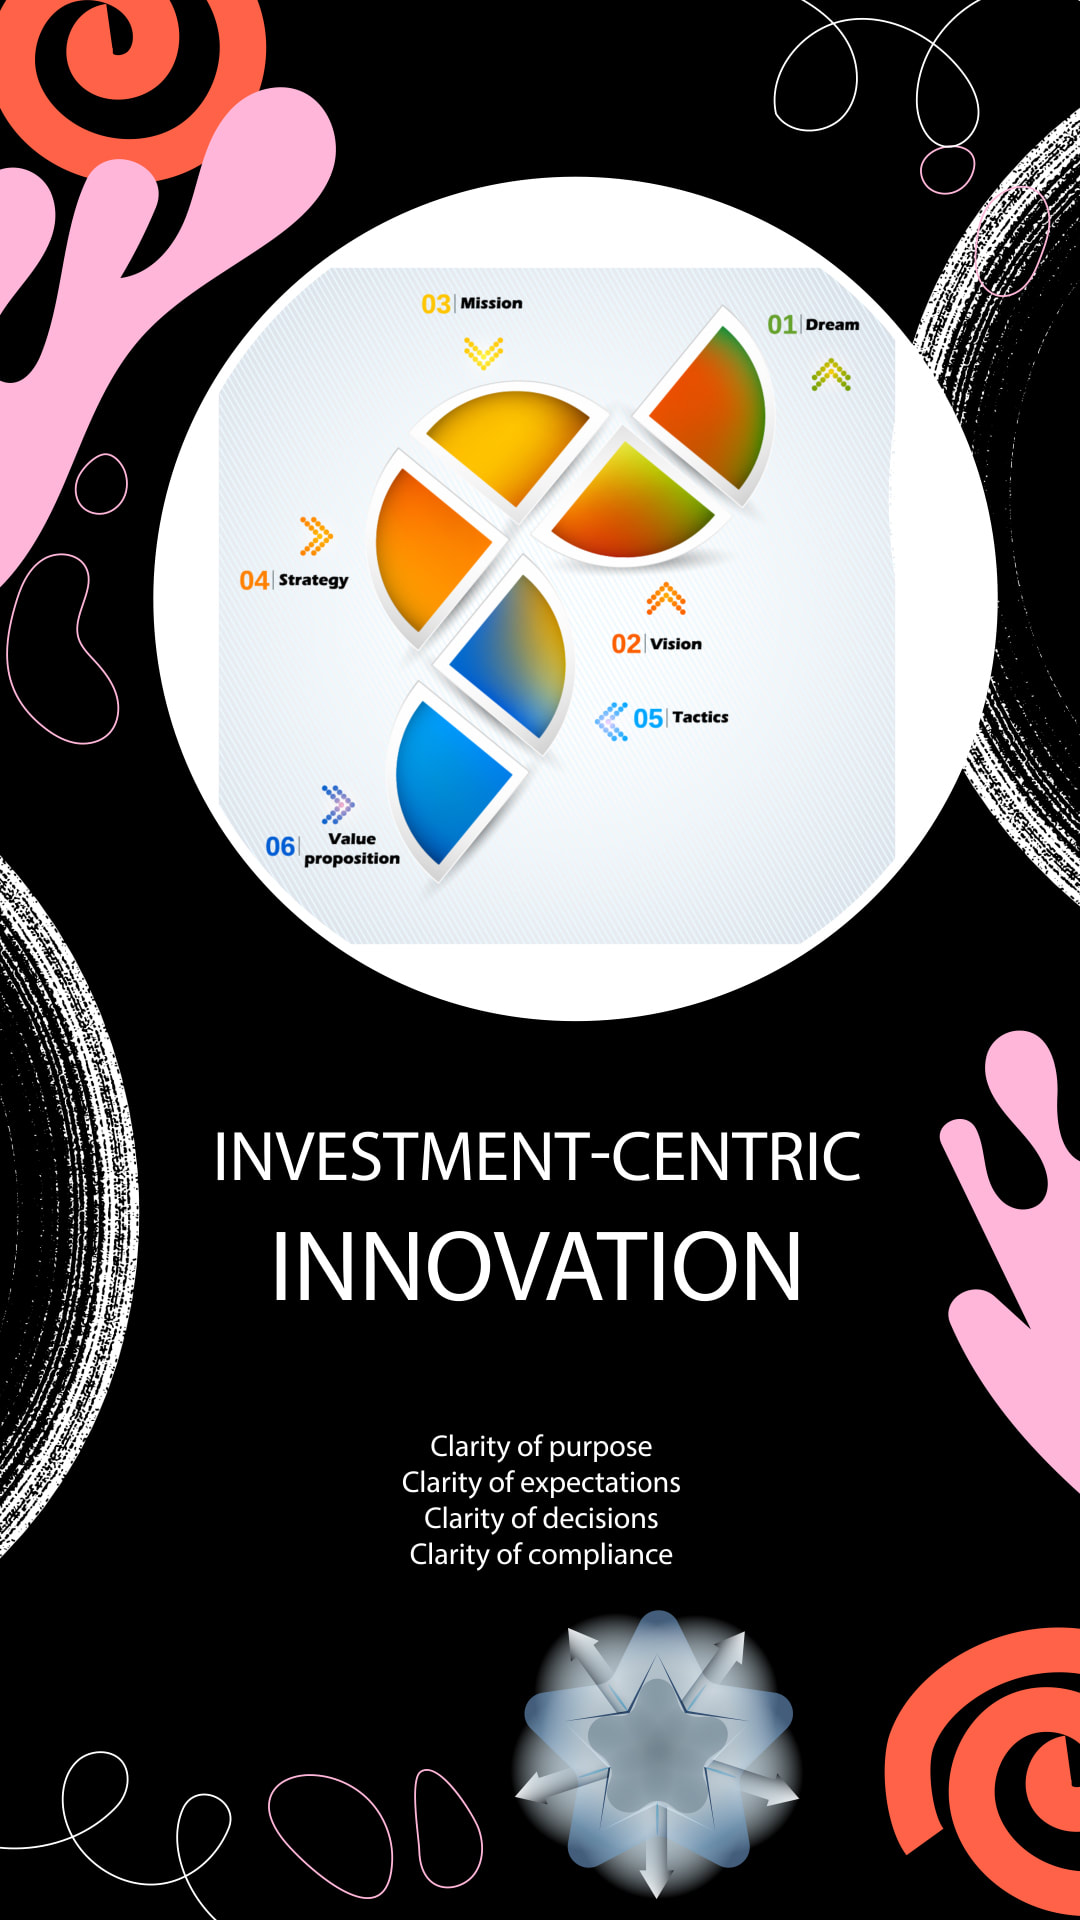 Innovation centered in financial returns